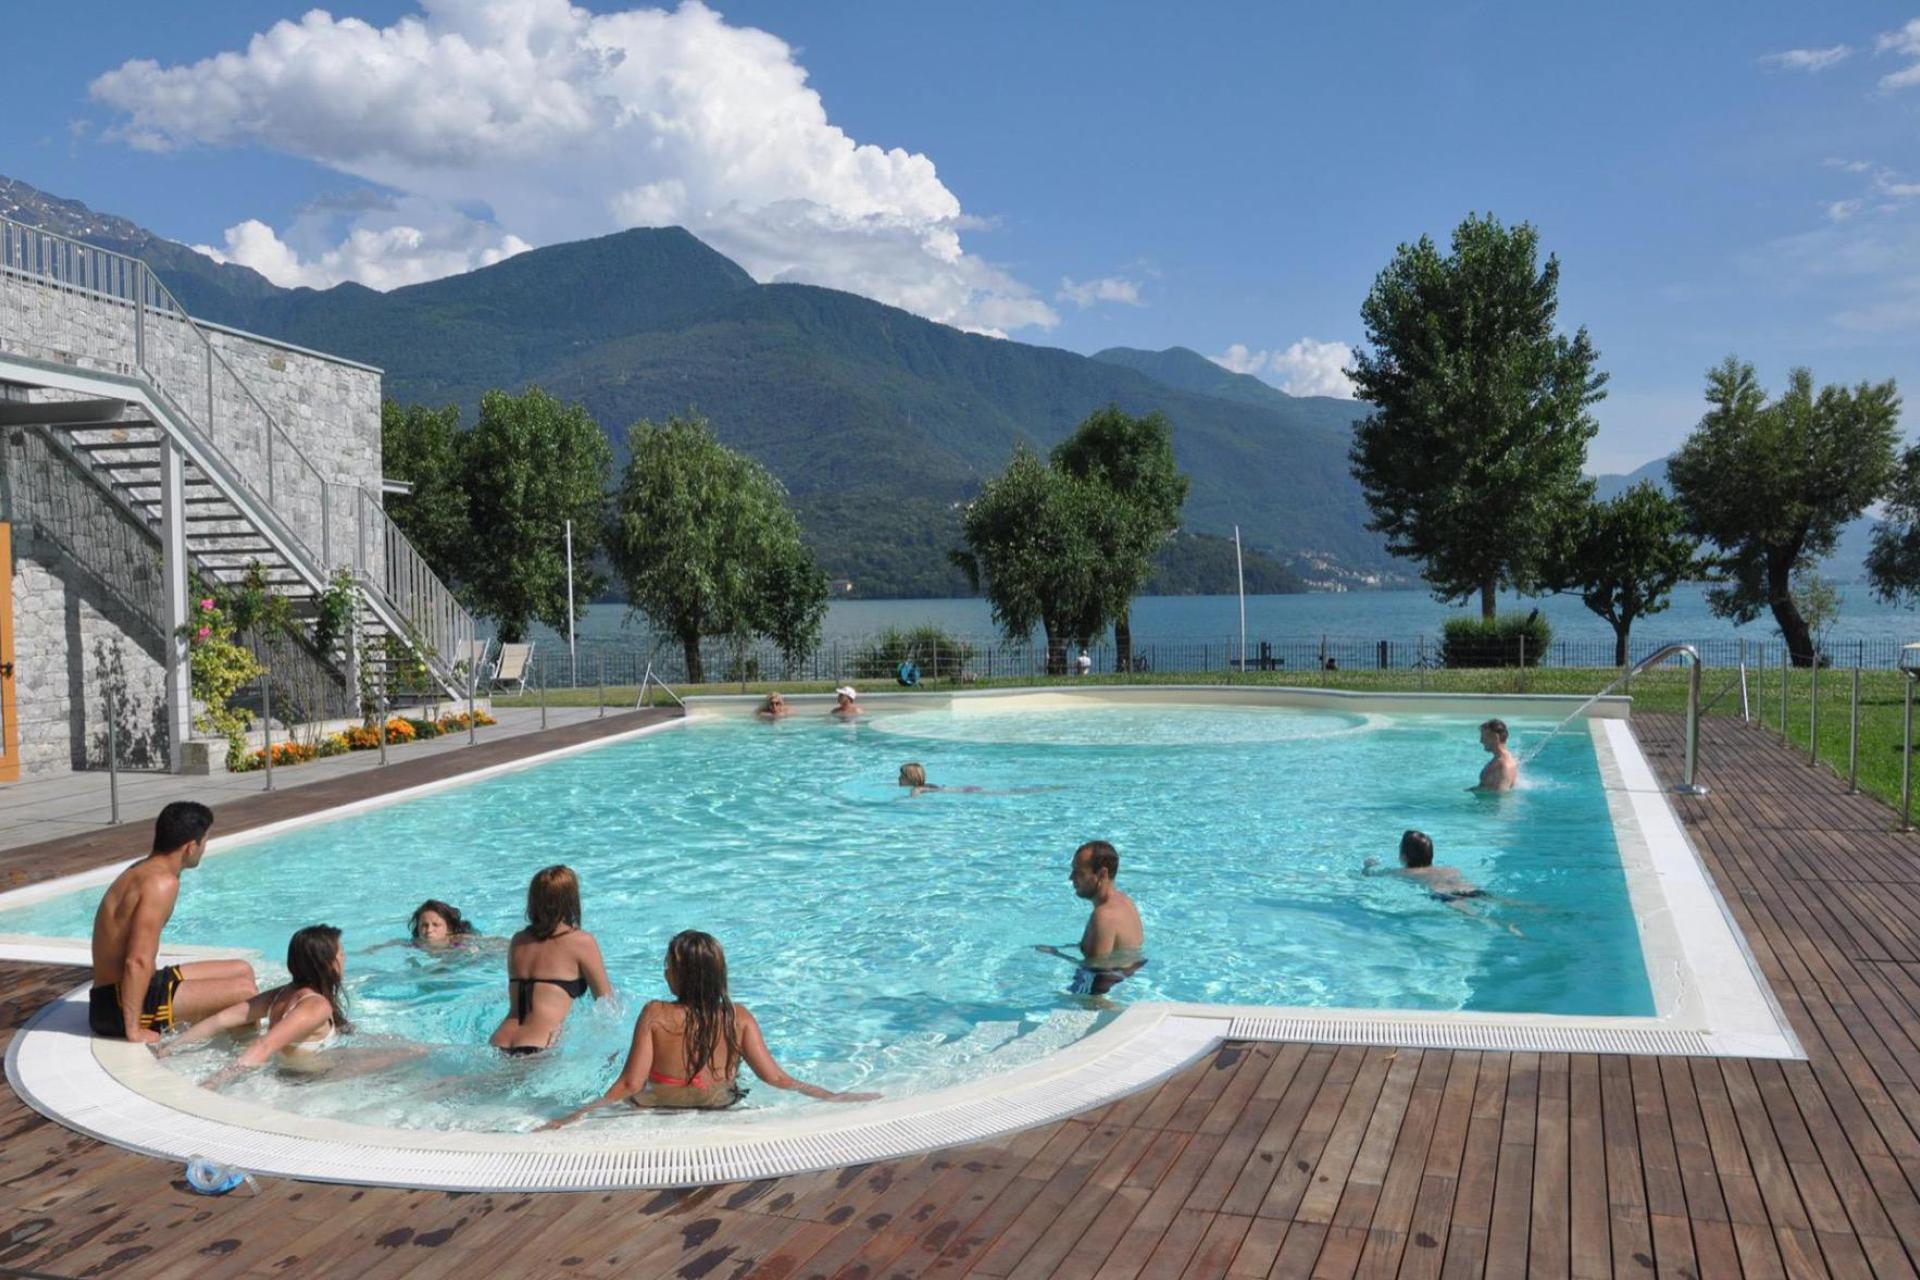 Agriturismo Lake Como and Lake Garda Small country hotel in wonderful location on Lake Como